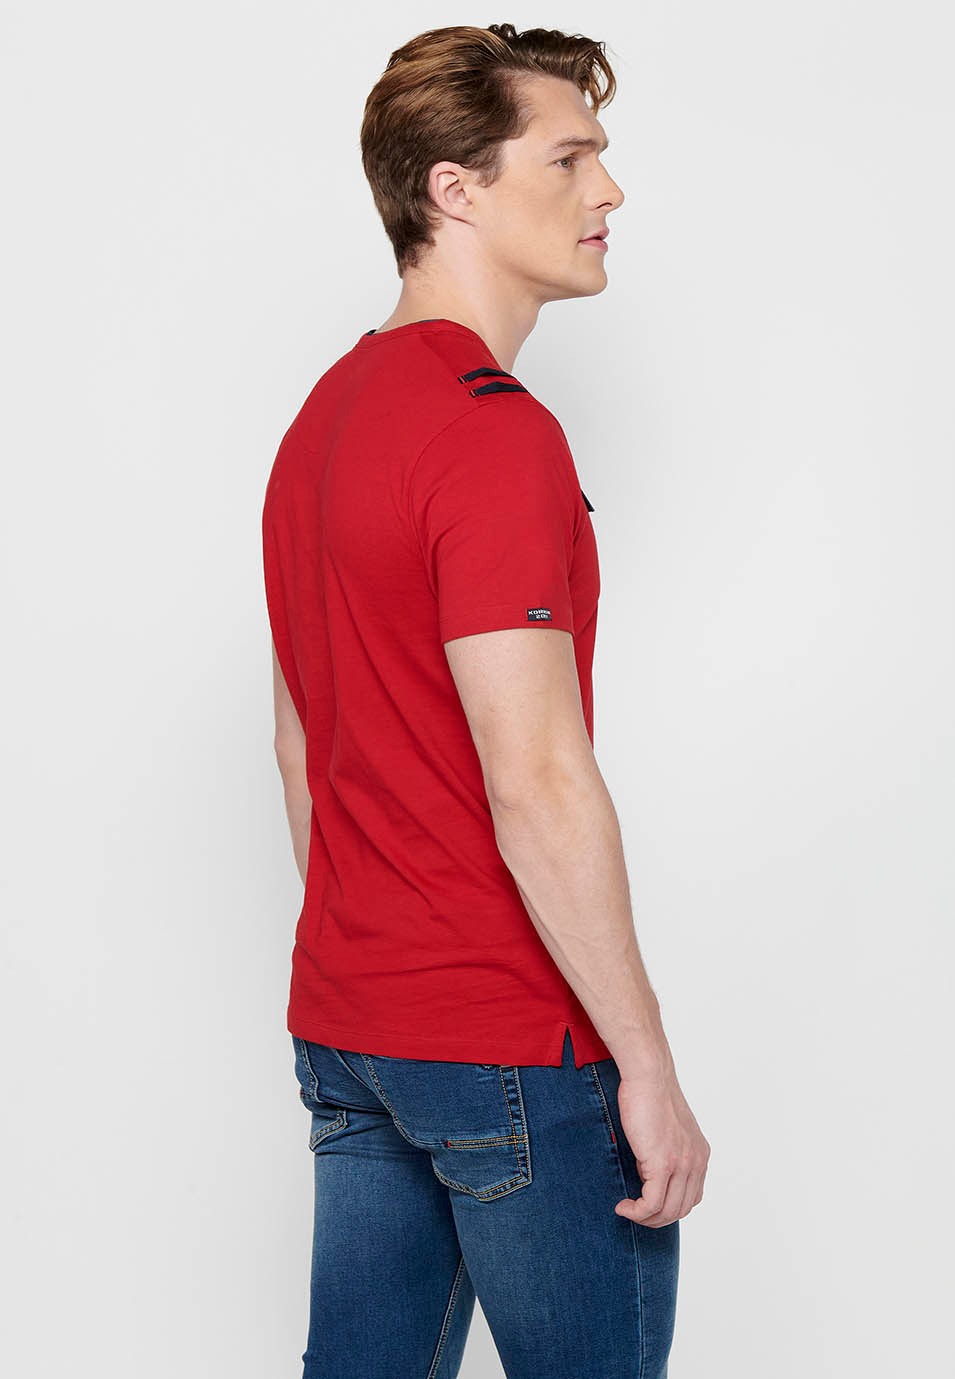 Camiseta de manga corta de Algodón con Cuello redondo con abertura abotonada de Color Rojo para Hombre 4